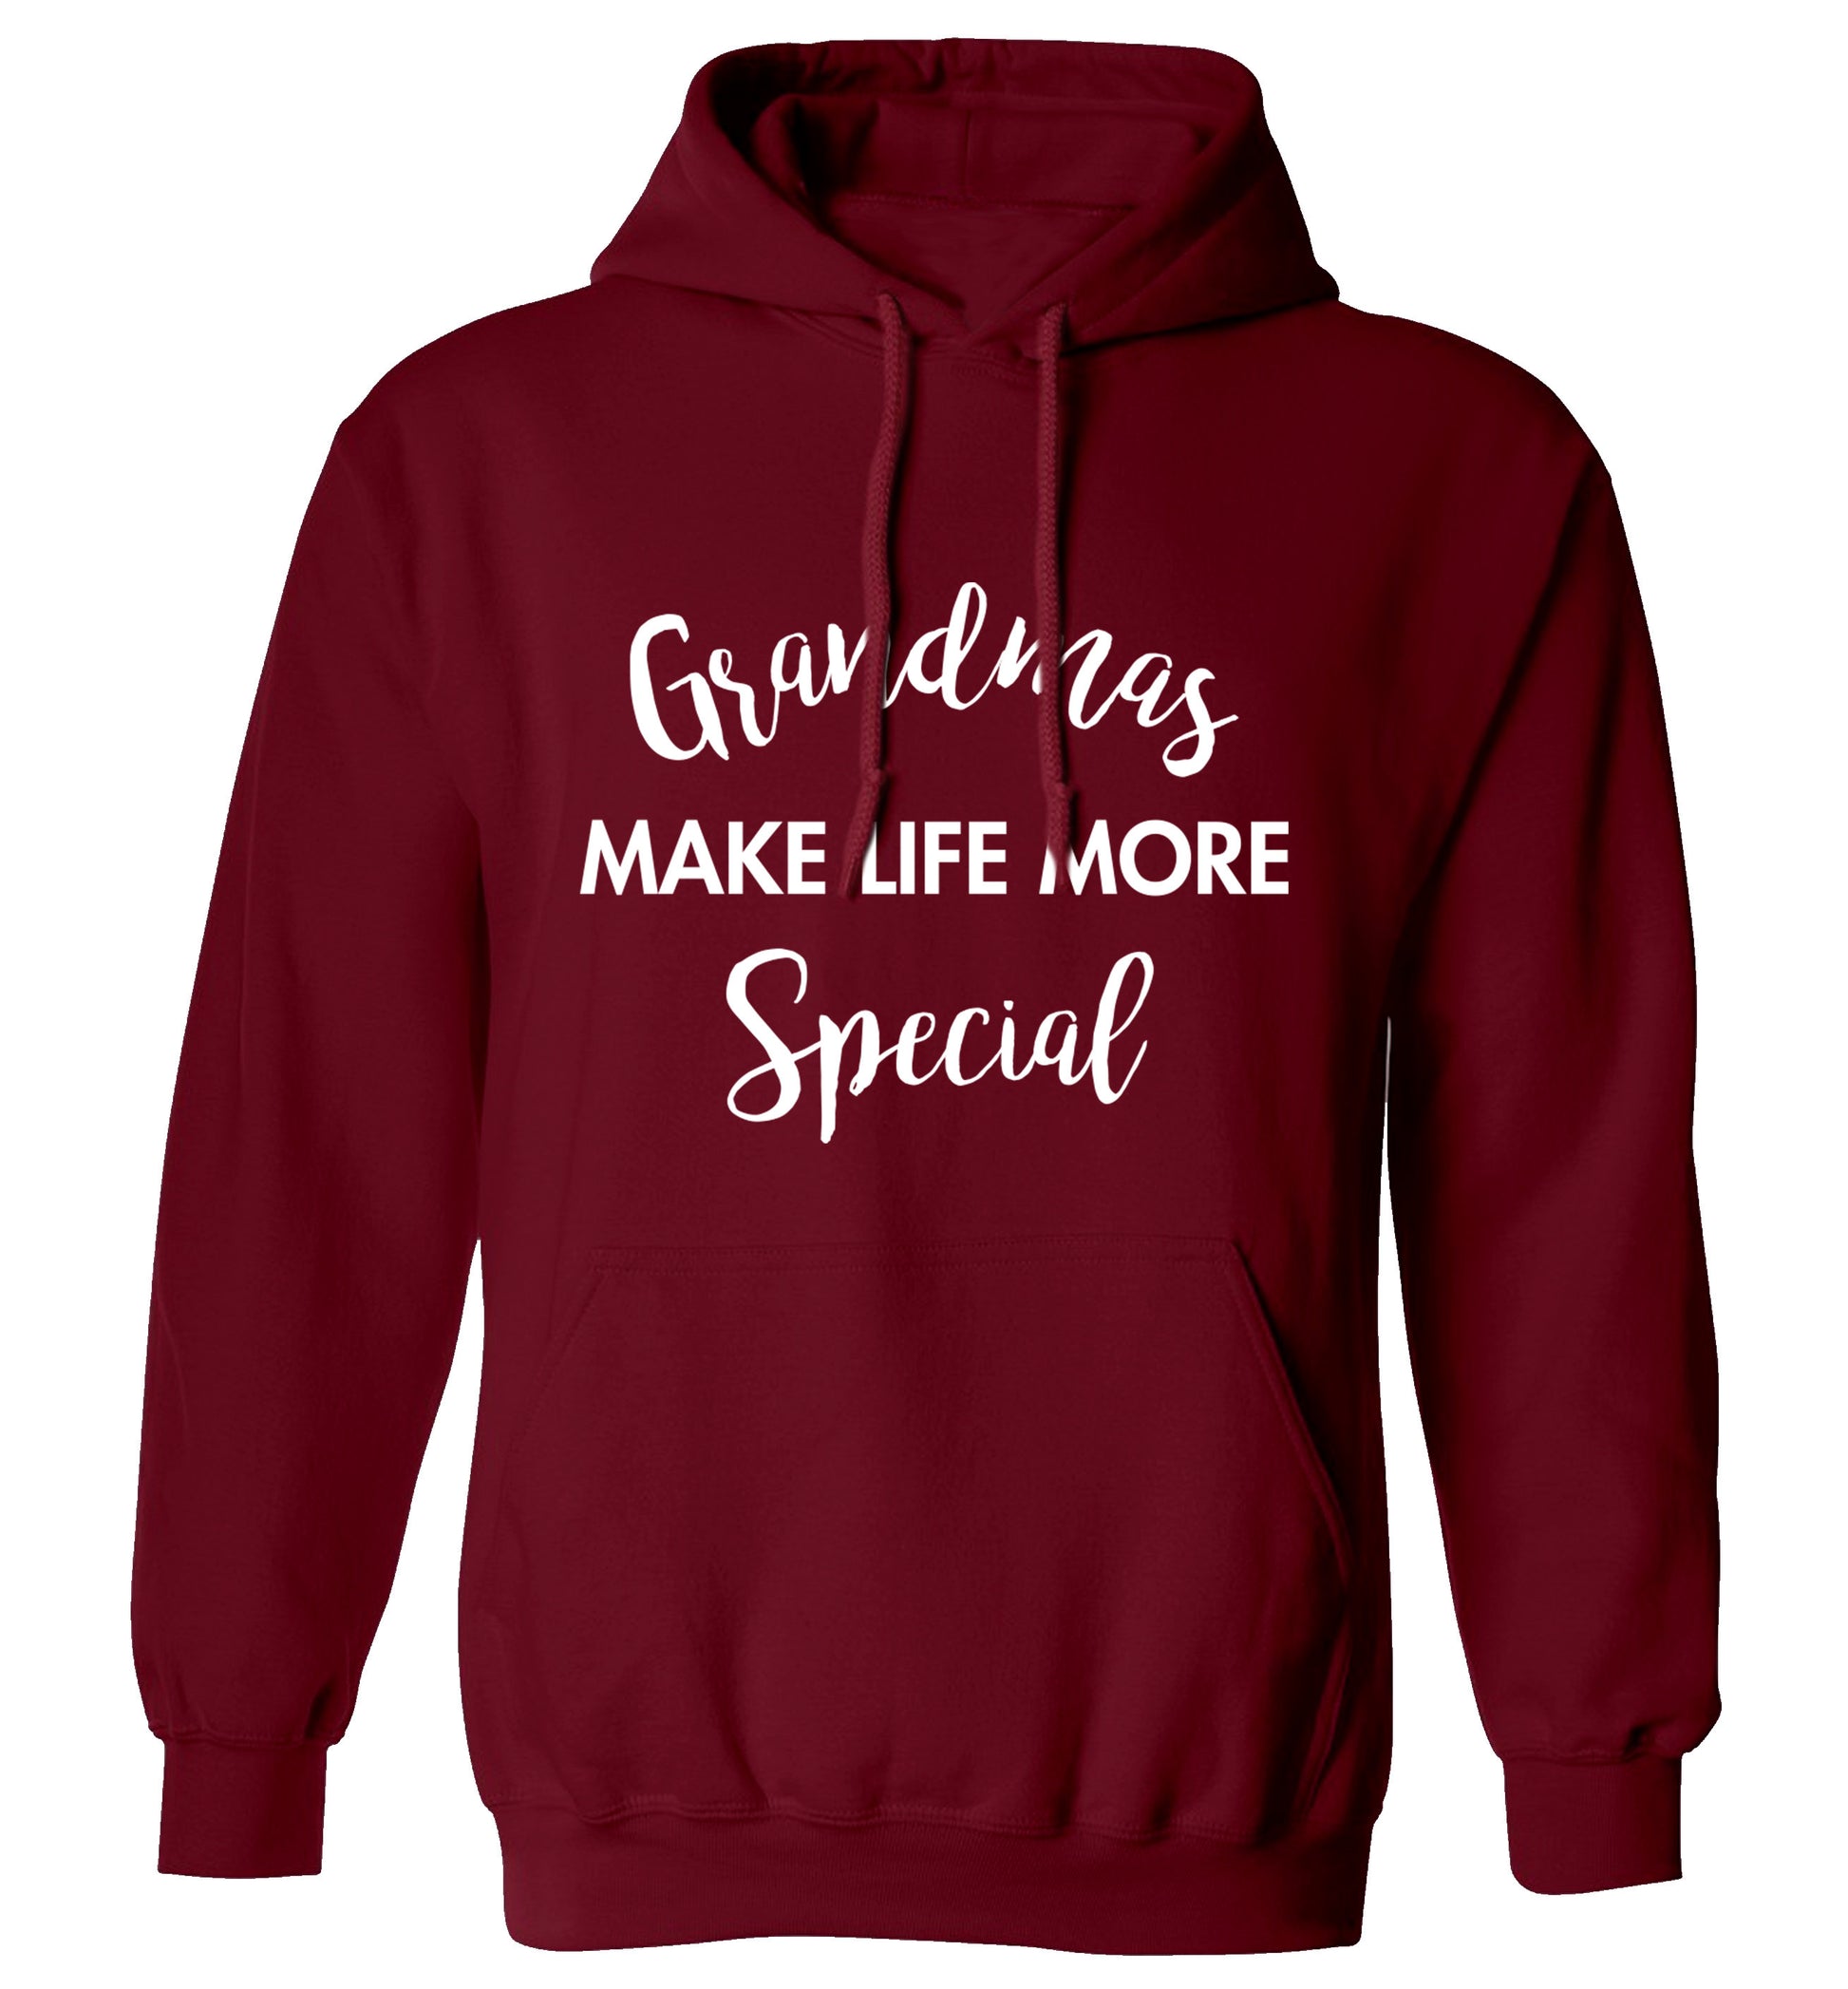 Grandmas make life more special adults unisex maroon hoodie 2XL